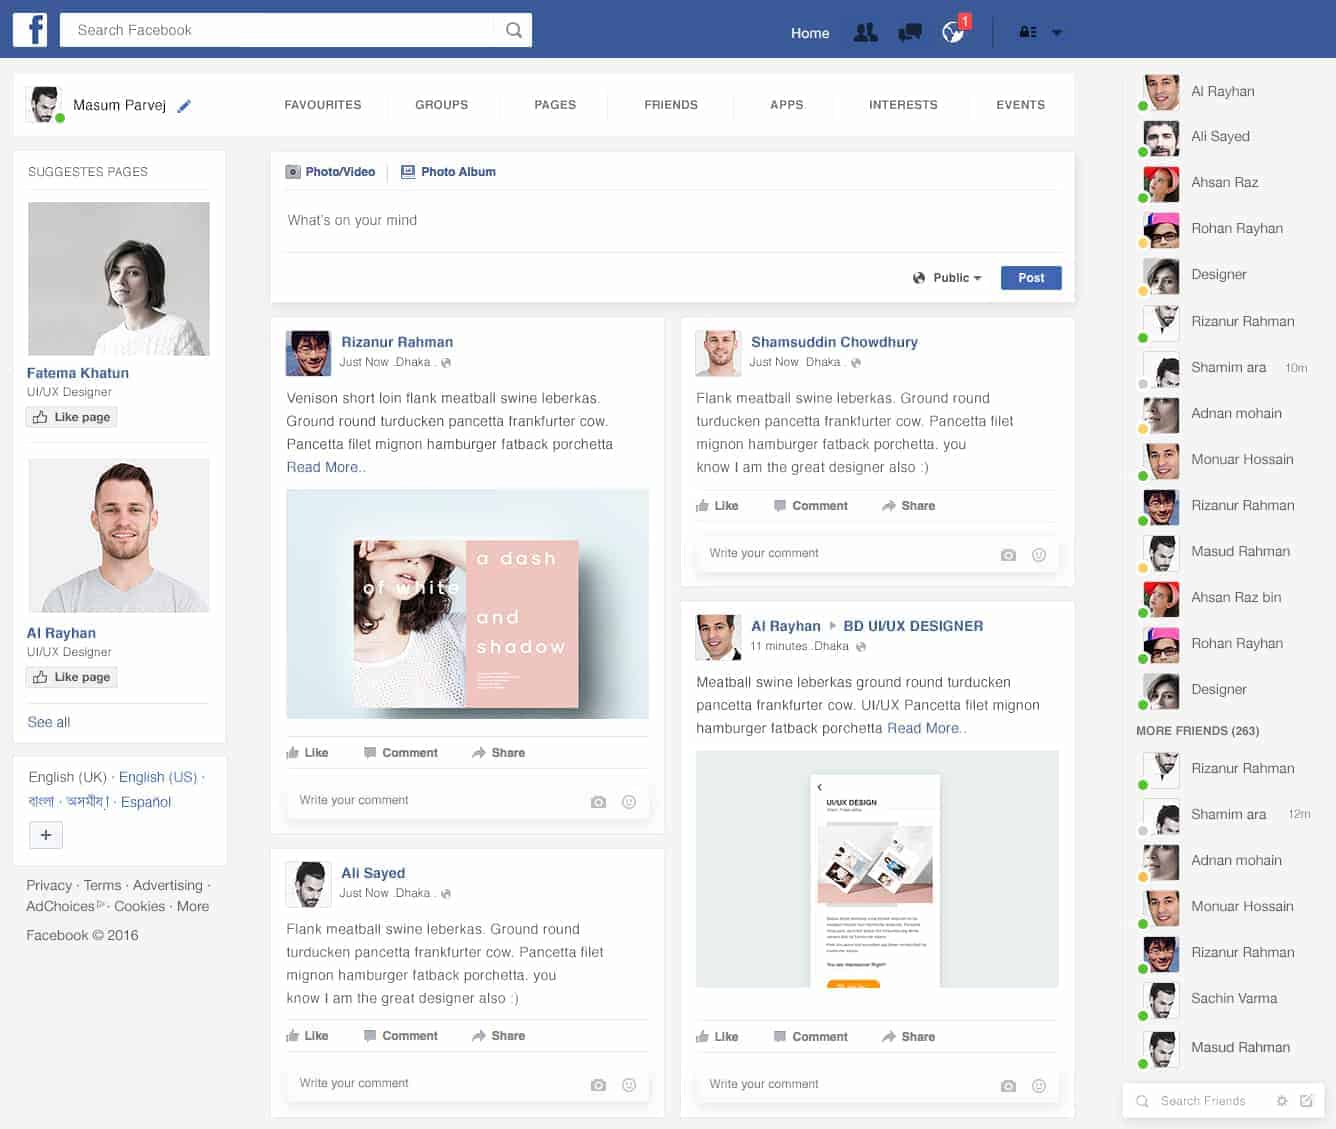 facebook-home-page-redesign-design-ideas